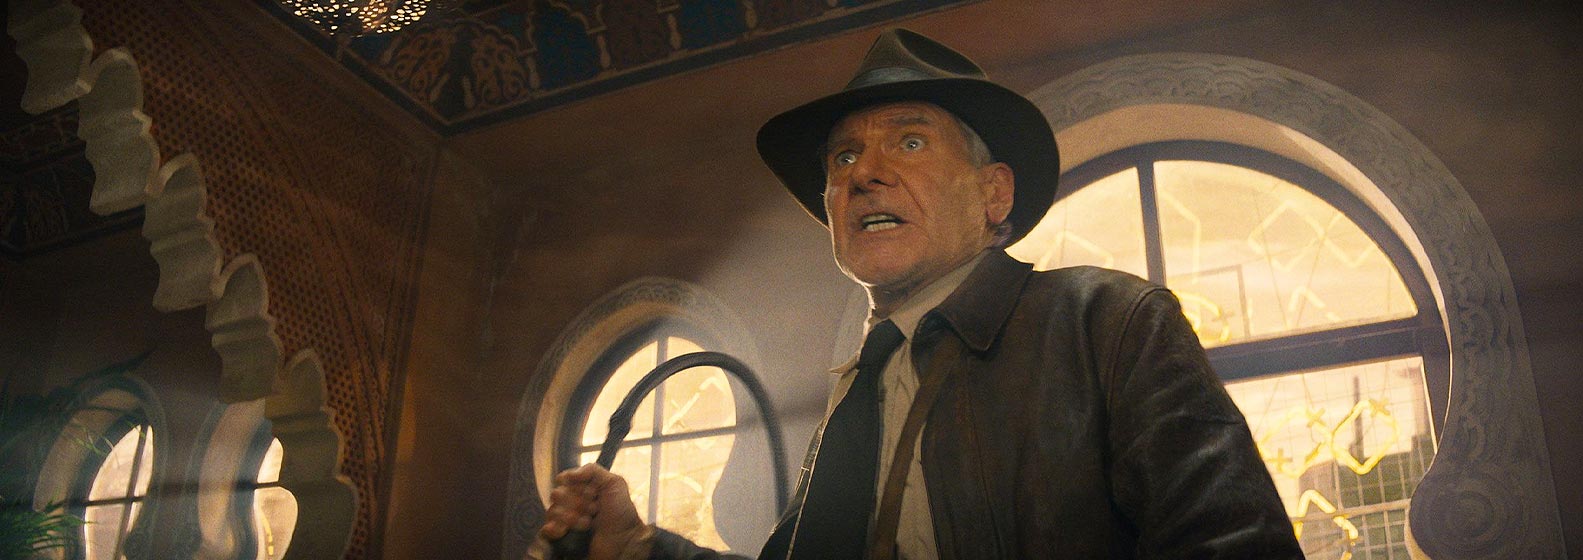 Indiana Jones Et Le Cadran De La Destinée - Header Image